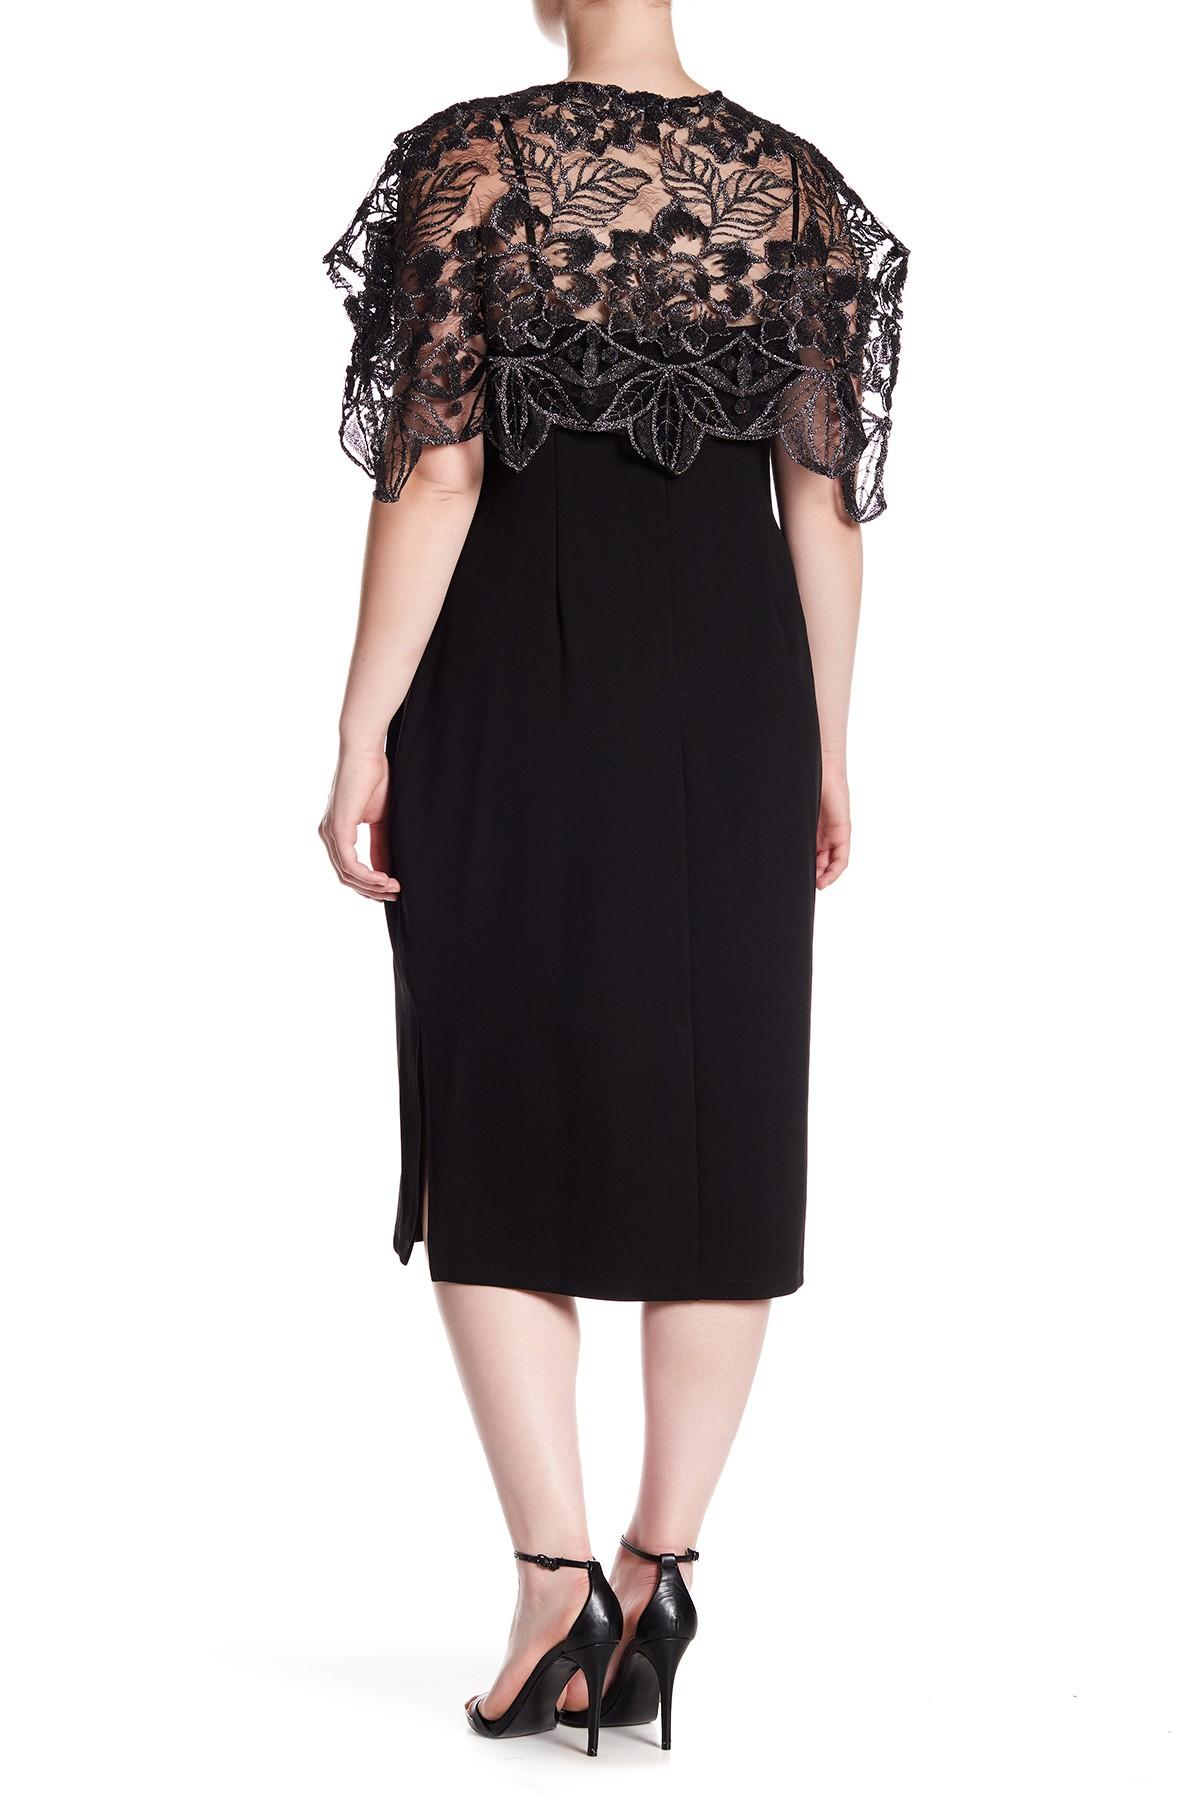 Lyst - Marina Lace Capelet Sheath Dress (plus Size) in Black